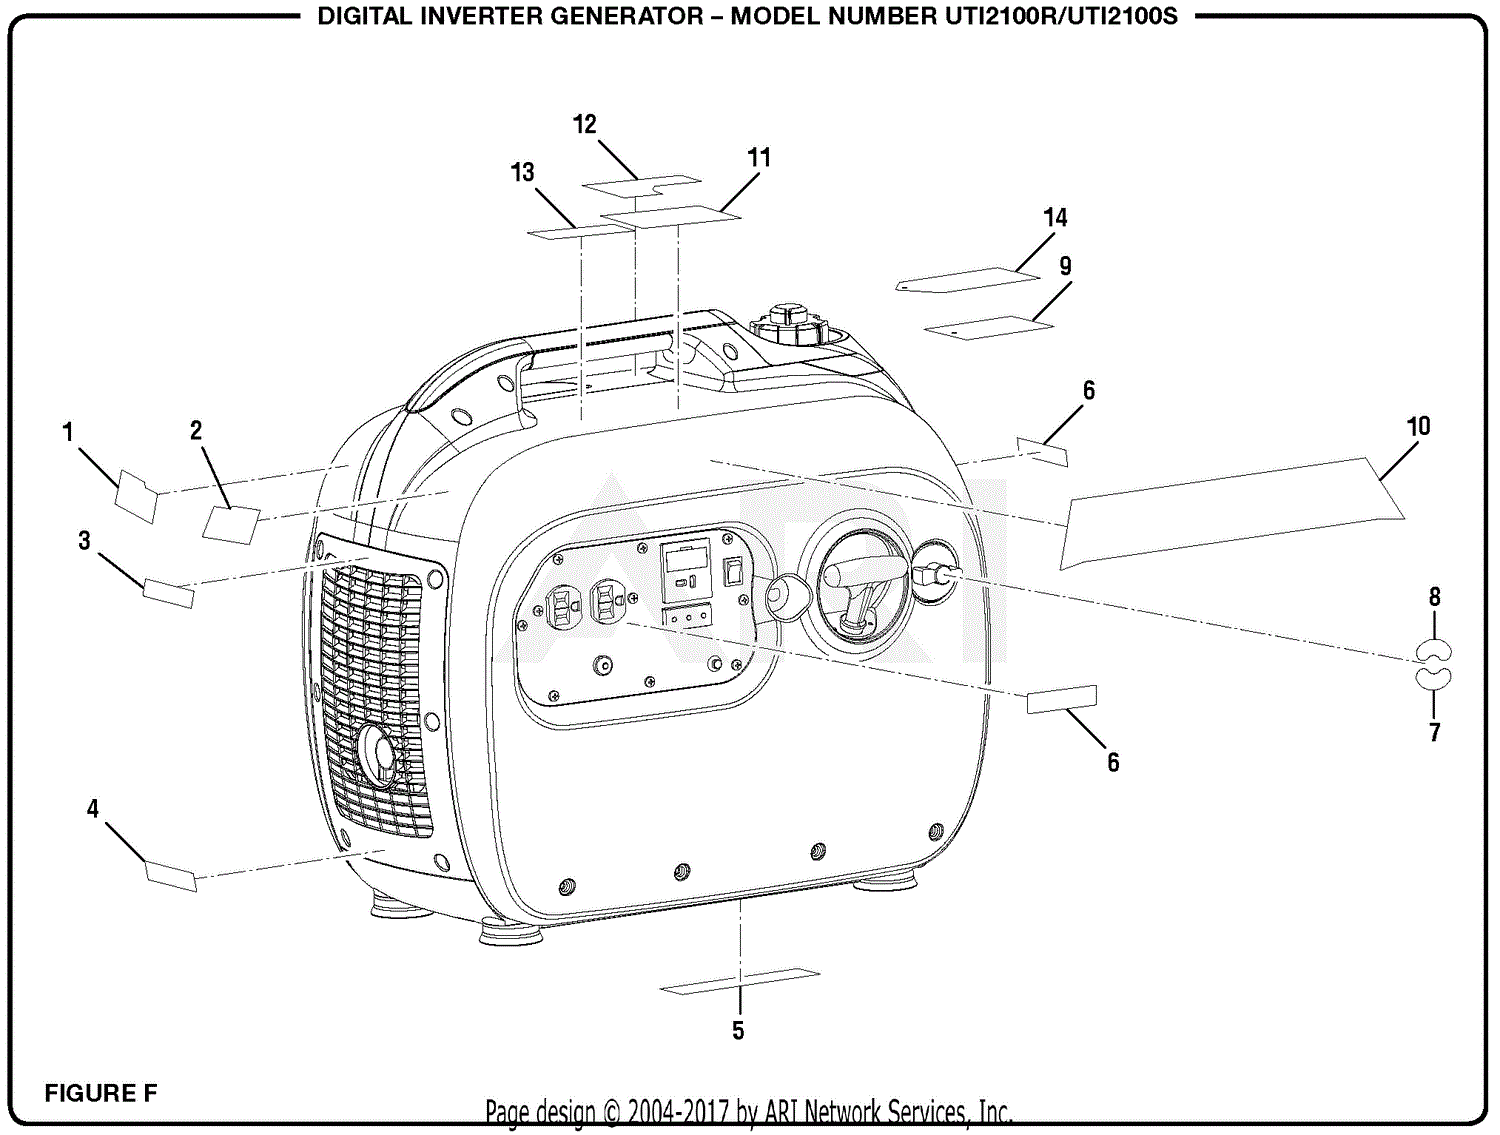 Homelite Uti2100r Digital Inverter Generator Parts Diagram For Figure F.